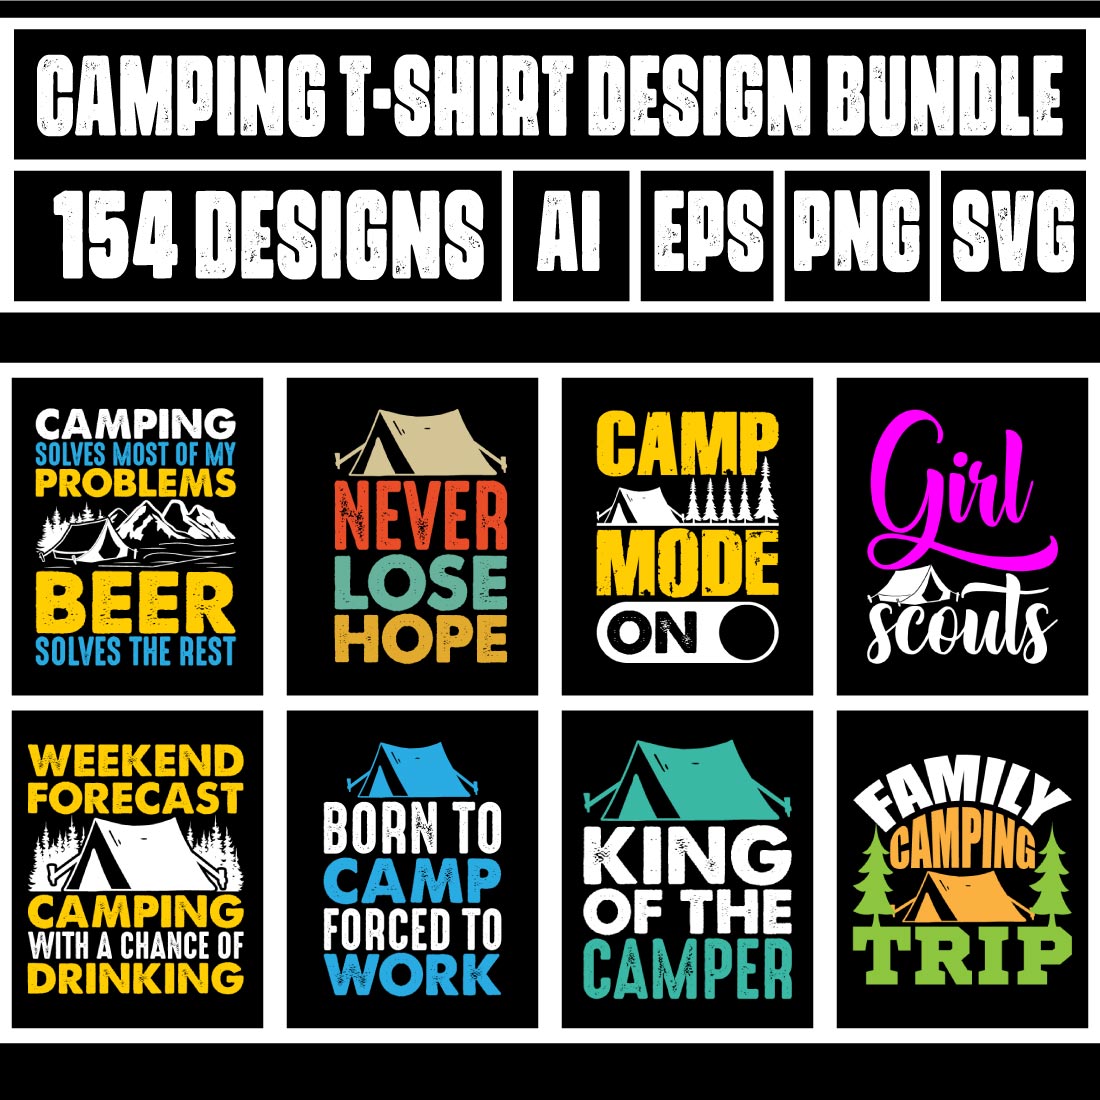 Camping T-shirt Design Bundle 2 preview image.